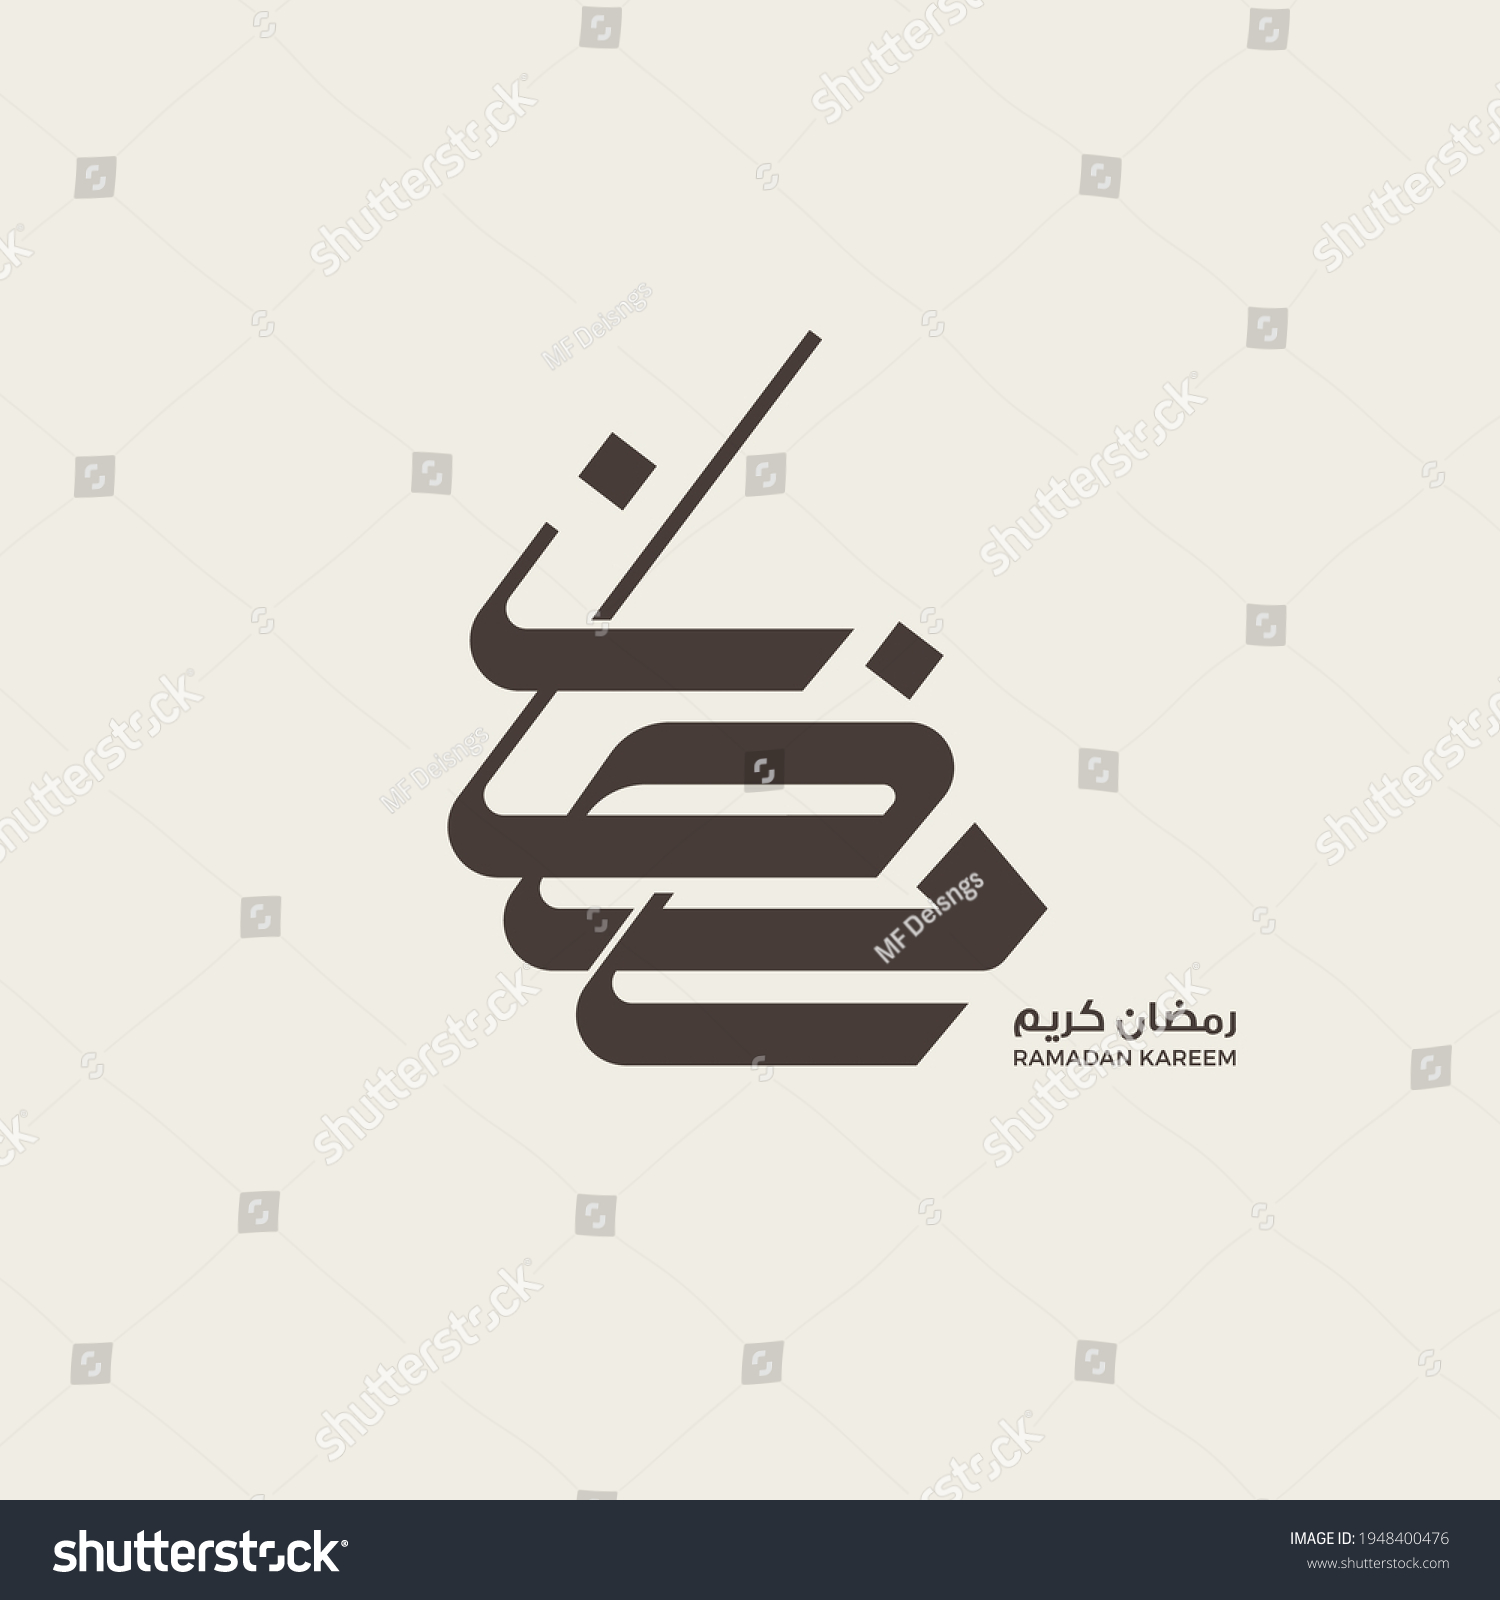 Ramadan Kareem Arabic Calligraphy Logo Ramadan Stock Vector (Royalty ...